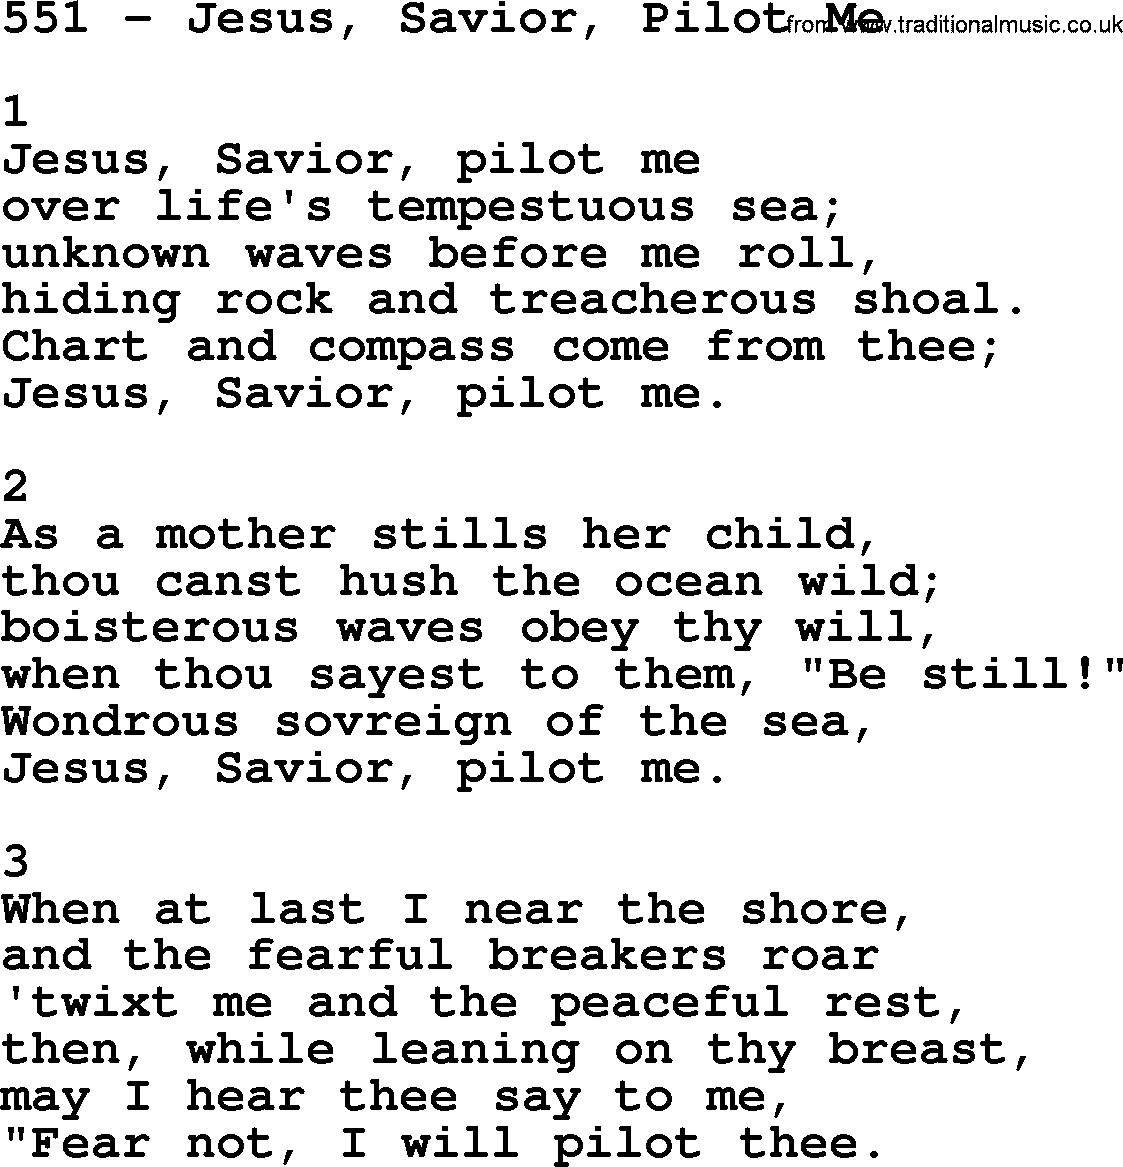 Complete Adventis Hymnal, title: 551-Jesus, Savior, Pilot Me, with lyrics, midi, mp3, powerpoints(PPT) and PDF,